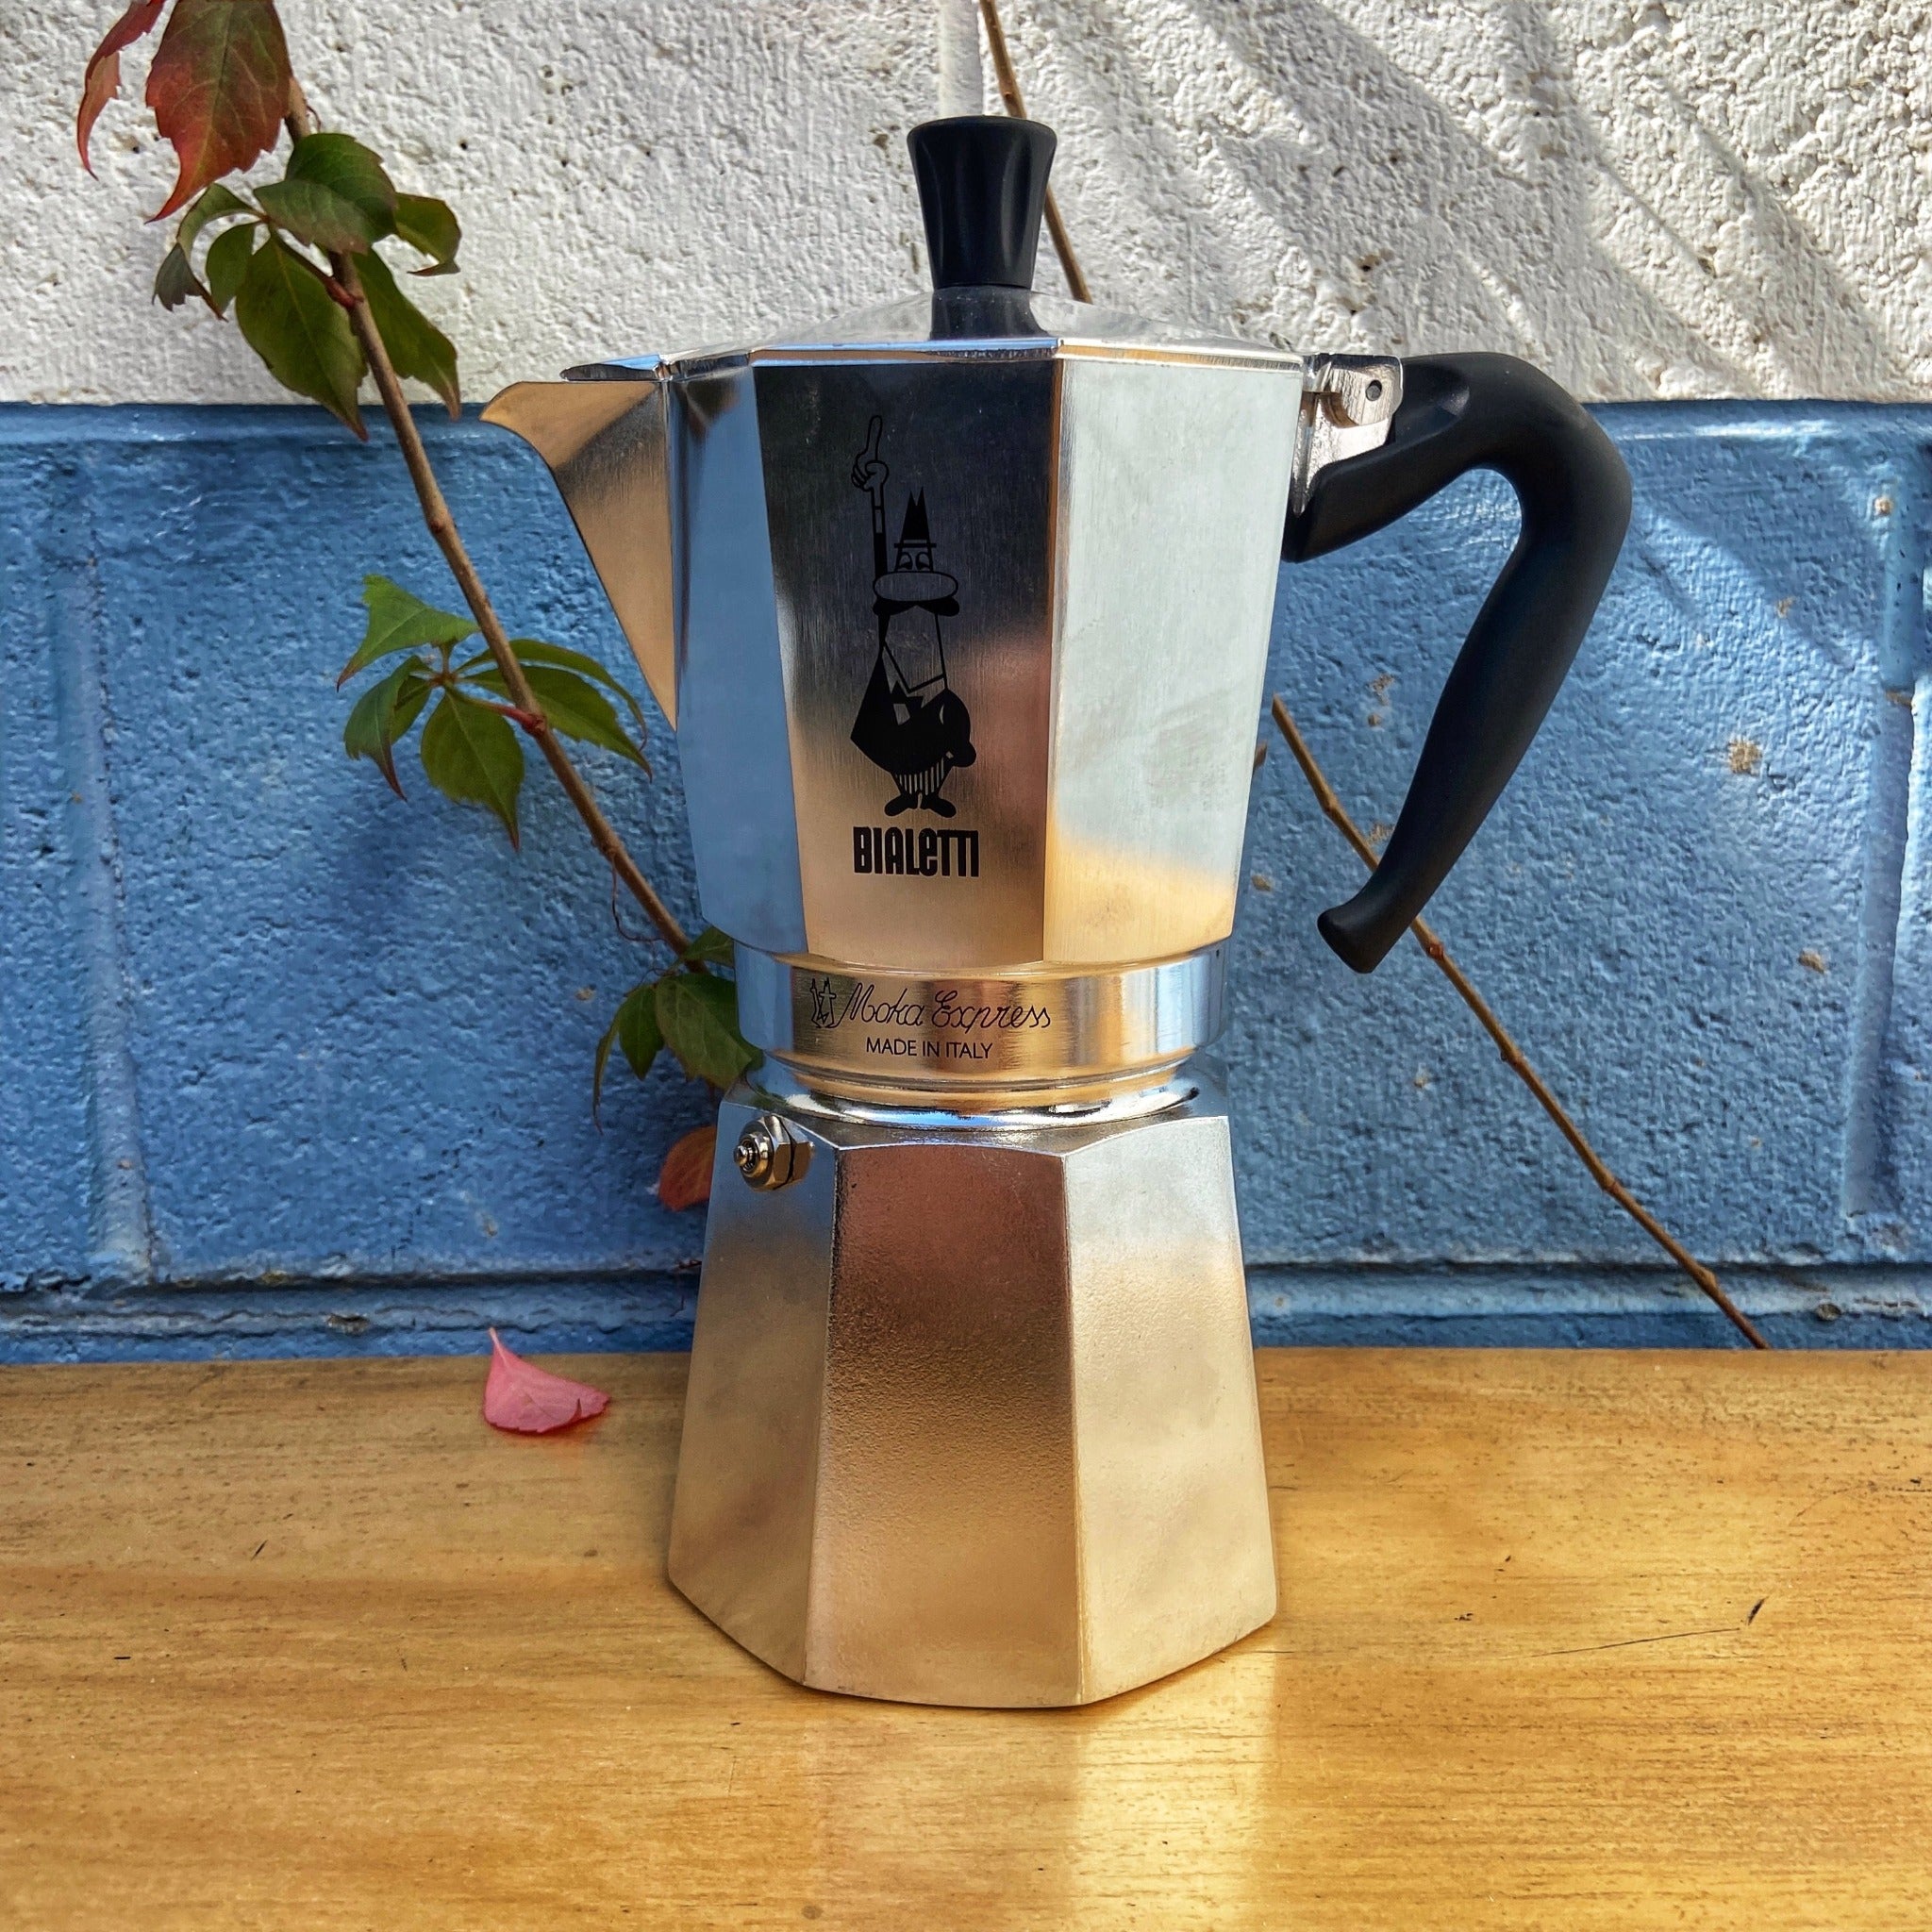 Bialetti Moka Express Stovetop Espresso Maker, 9 Cup - Cupper's